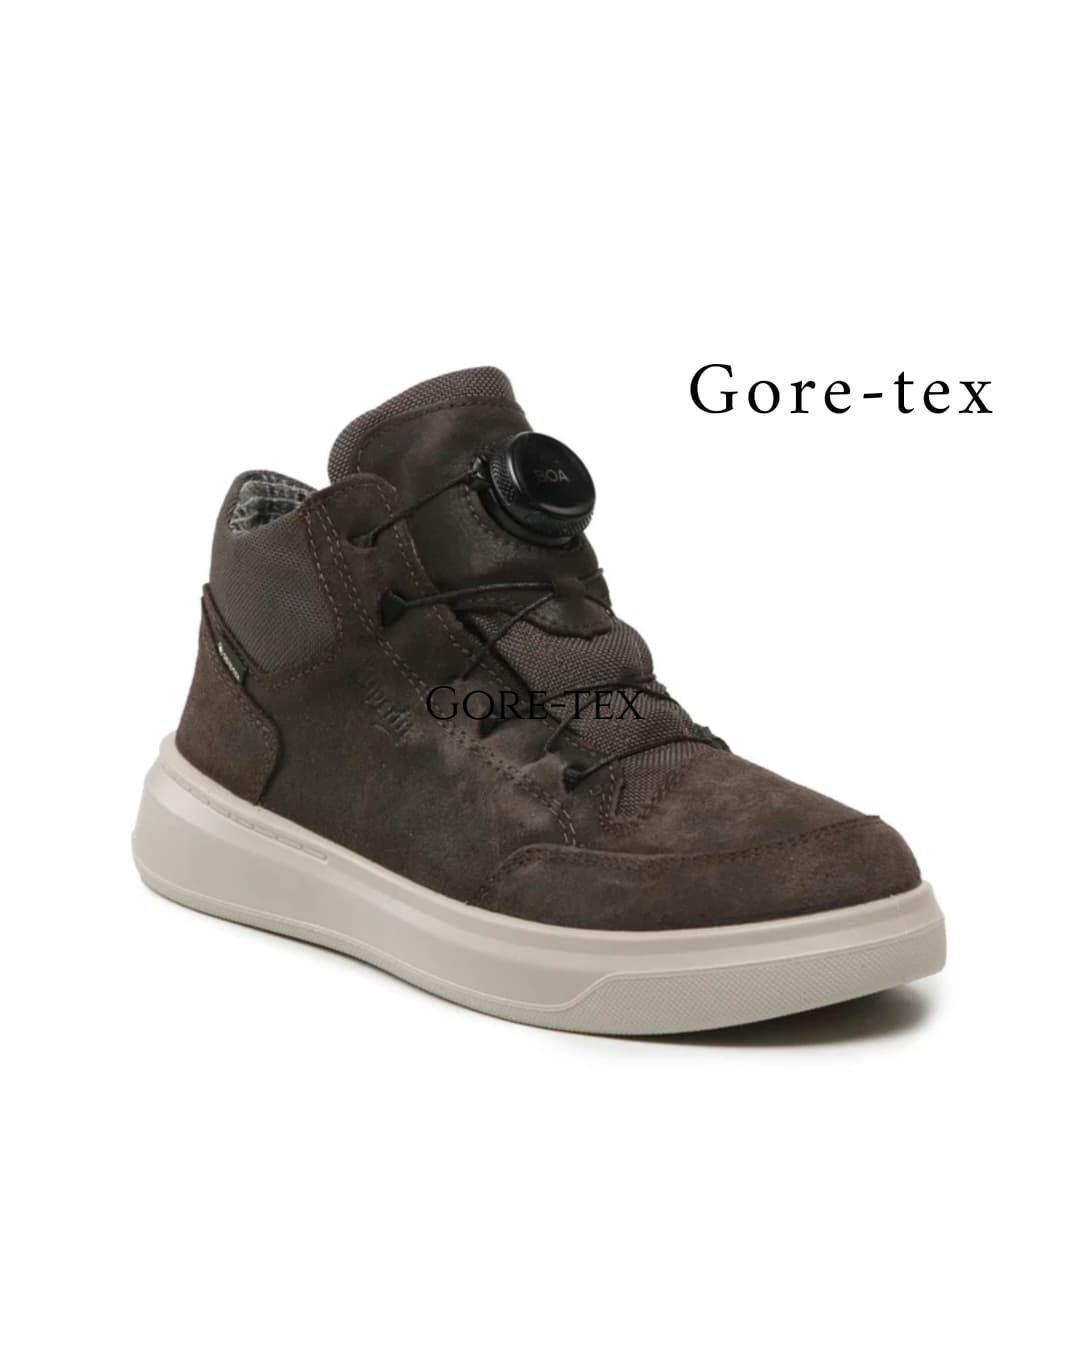 Superfit Gore-tex Boot Brown Boa closure - Image 1